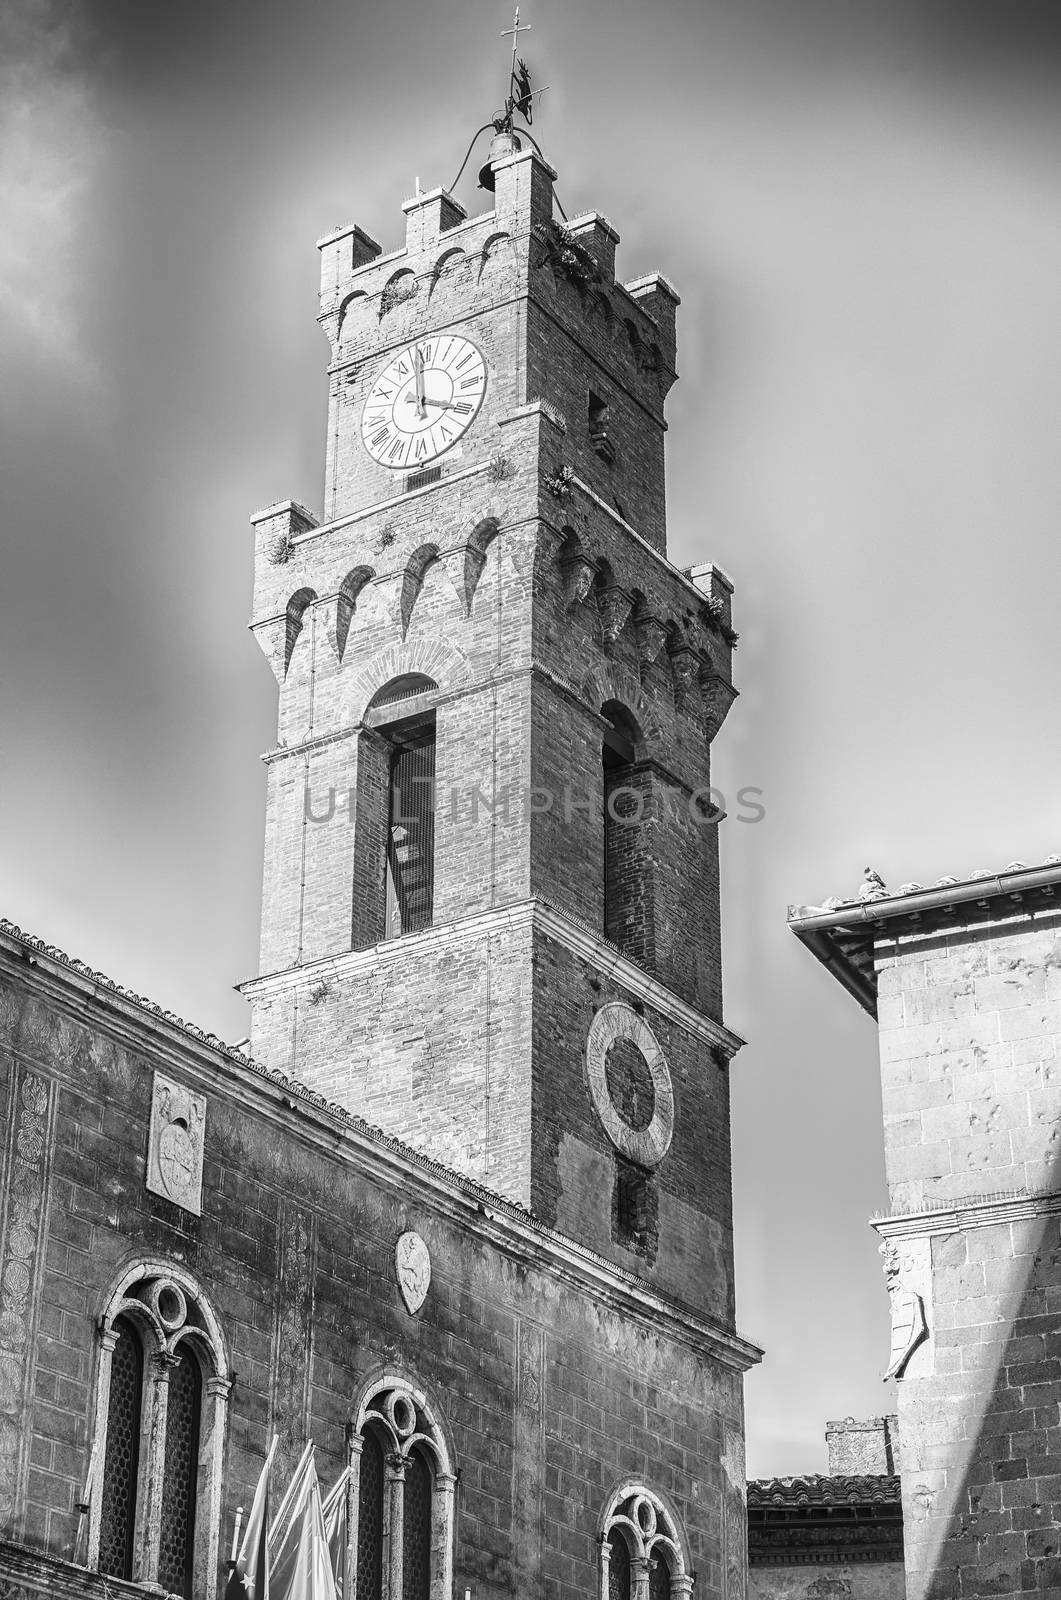 Clocktower of the Town Hall of Pienza, Tuscany, Italy by marcorubino